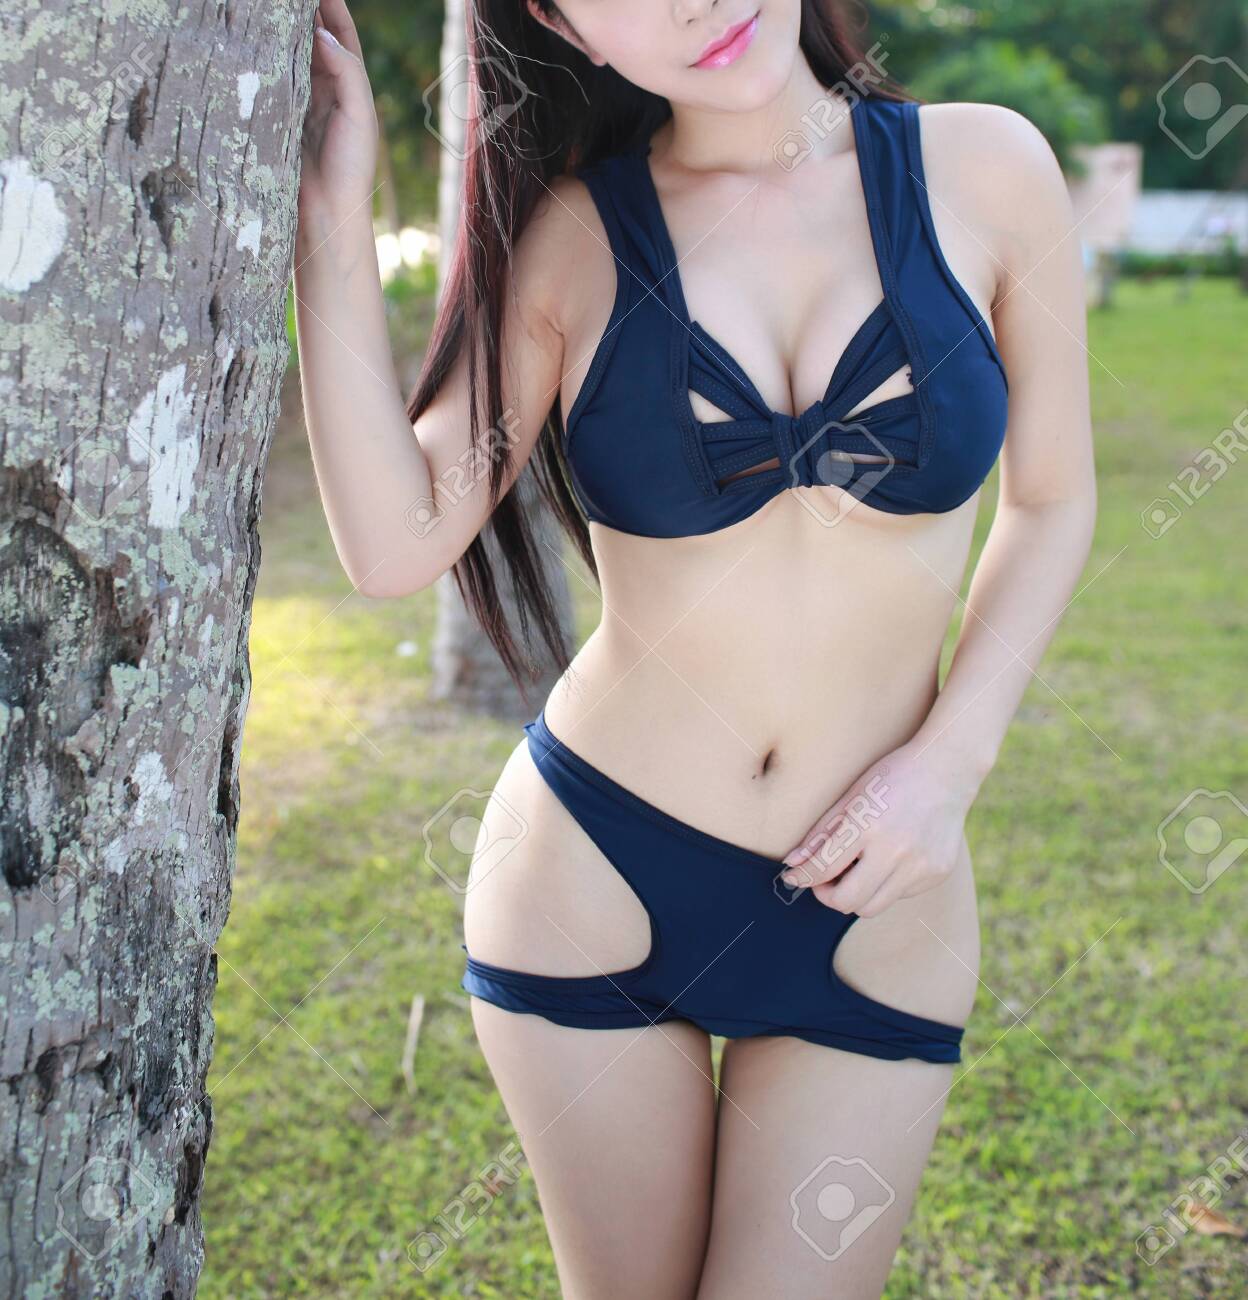 aniel martinez share hot babe with big boobs photos